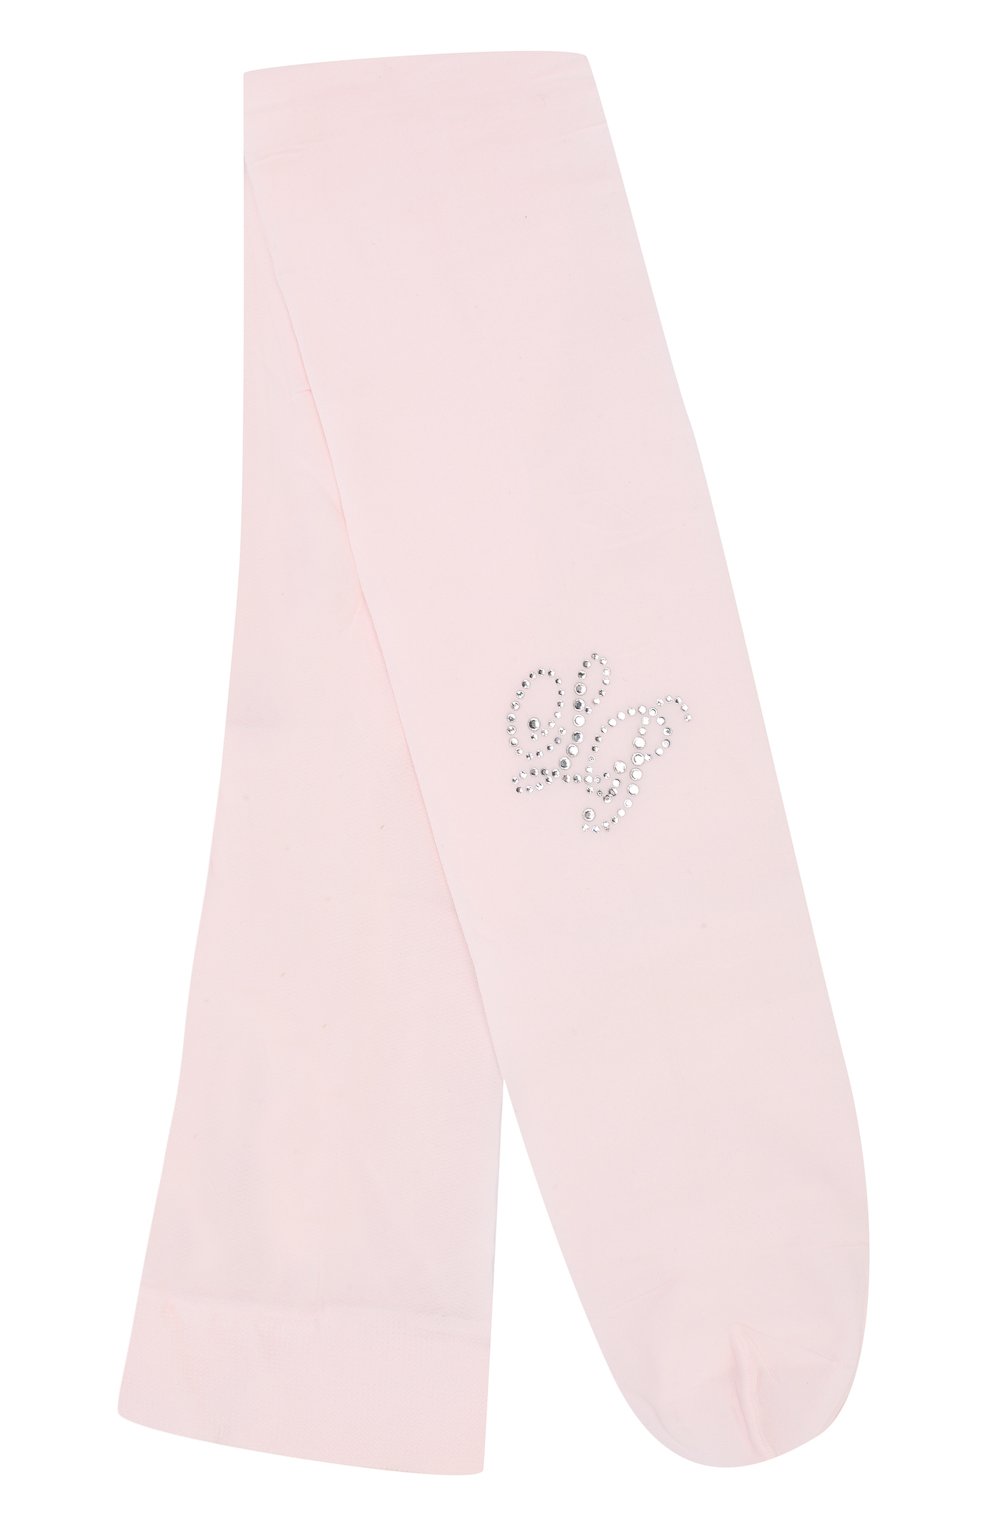 Детские колготы со стразами LA PERLA розового цвета, арт. 42208/4-6 | Фото 1 (Материал: Текстиль, Синтетический материал; Статус проверки: Проверено, Проверена категория)